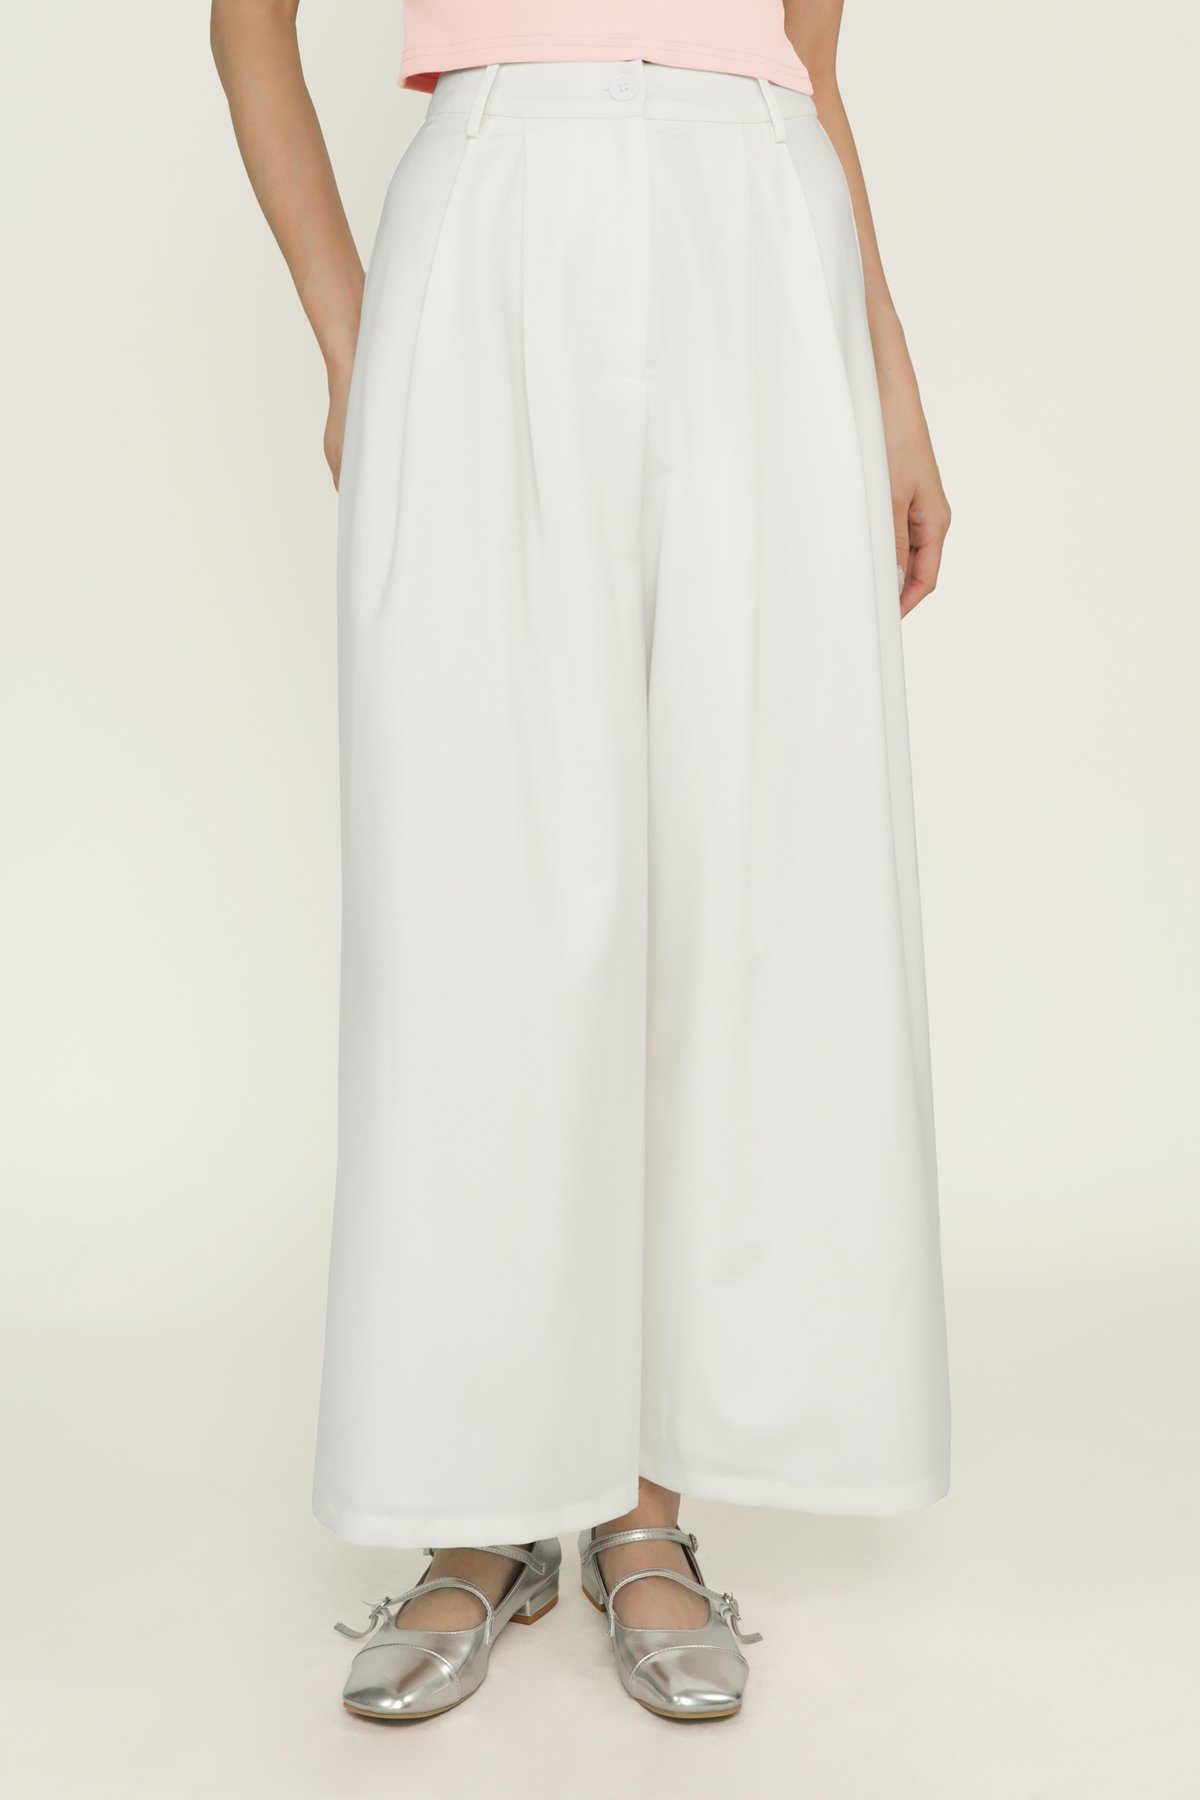 Zena Tailored Pleated Pants (White)